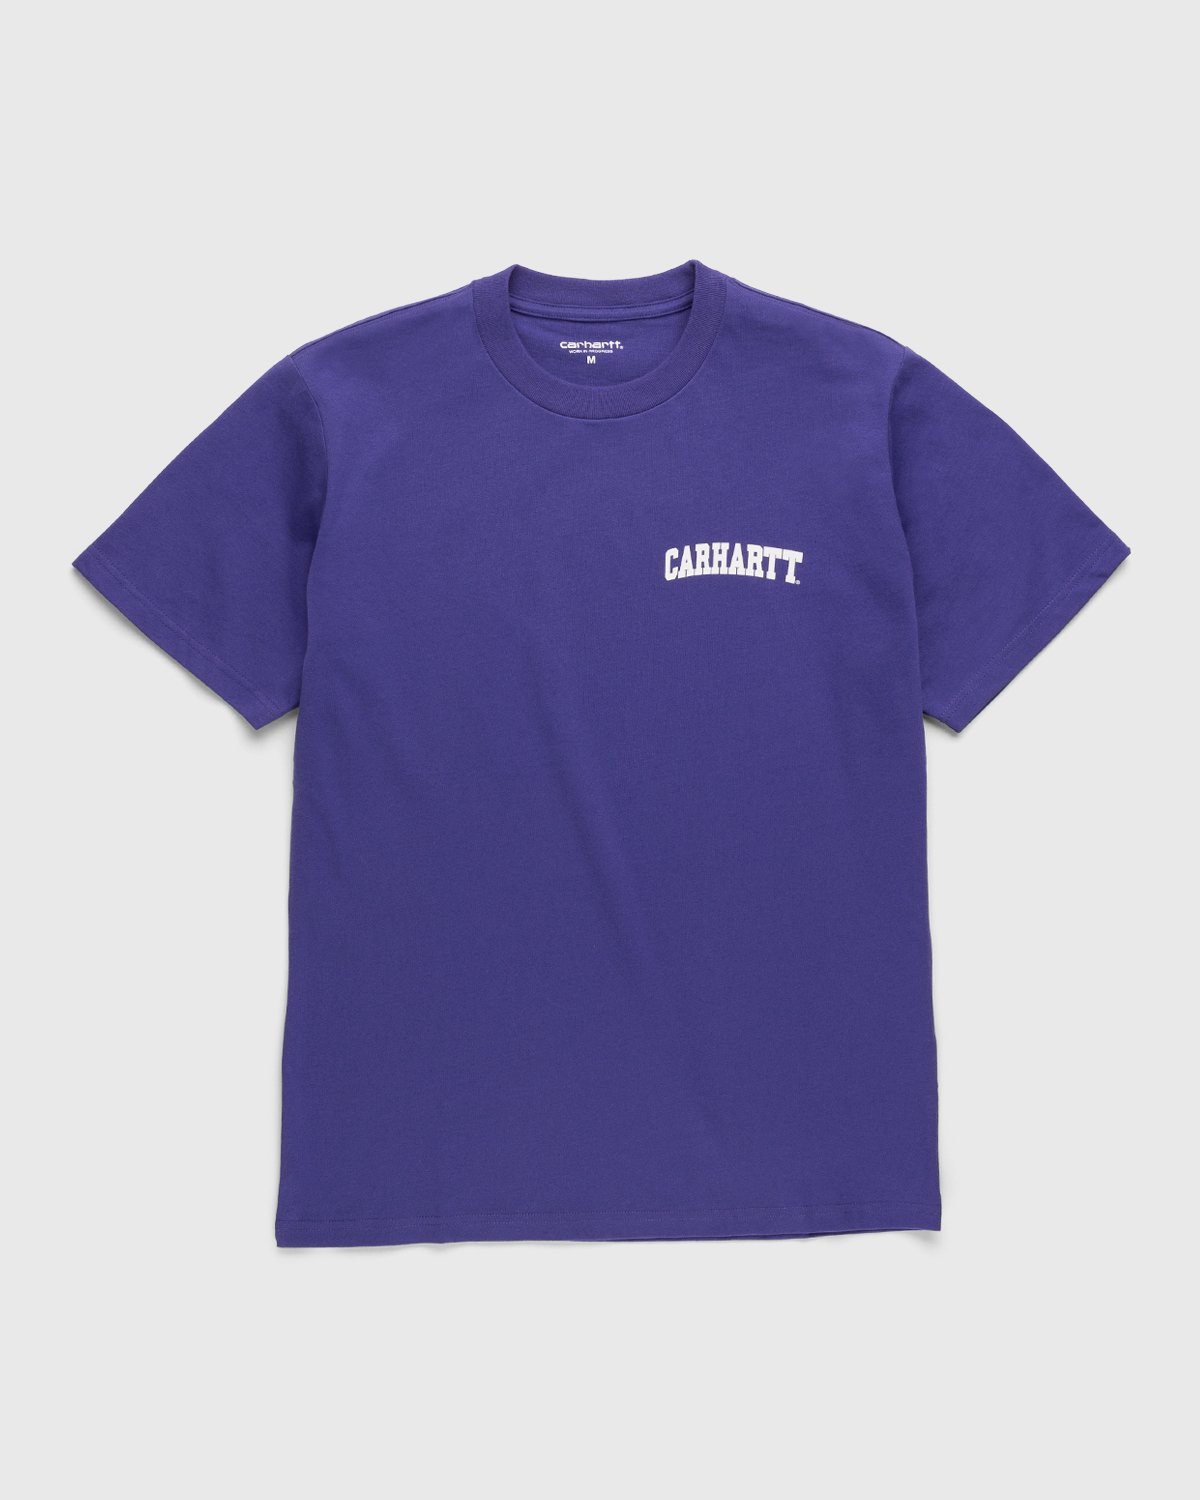 Carhartt WIP - University Script T-Shirt Razzmic White - Clothing - Purple - Image 1